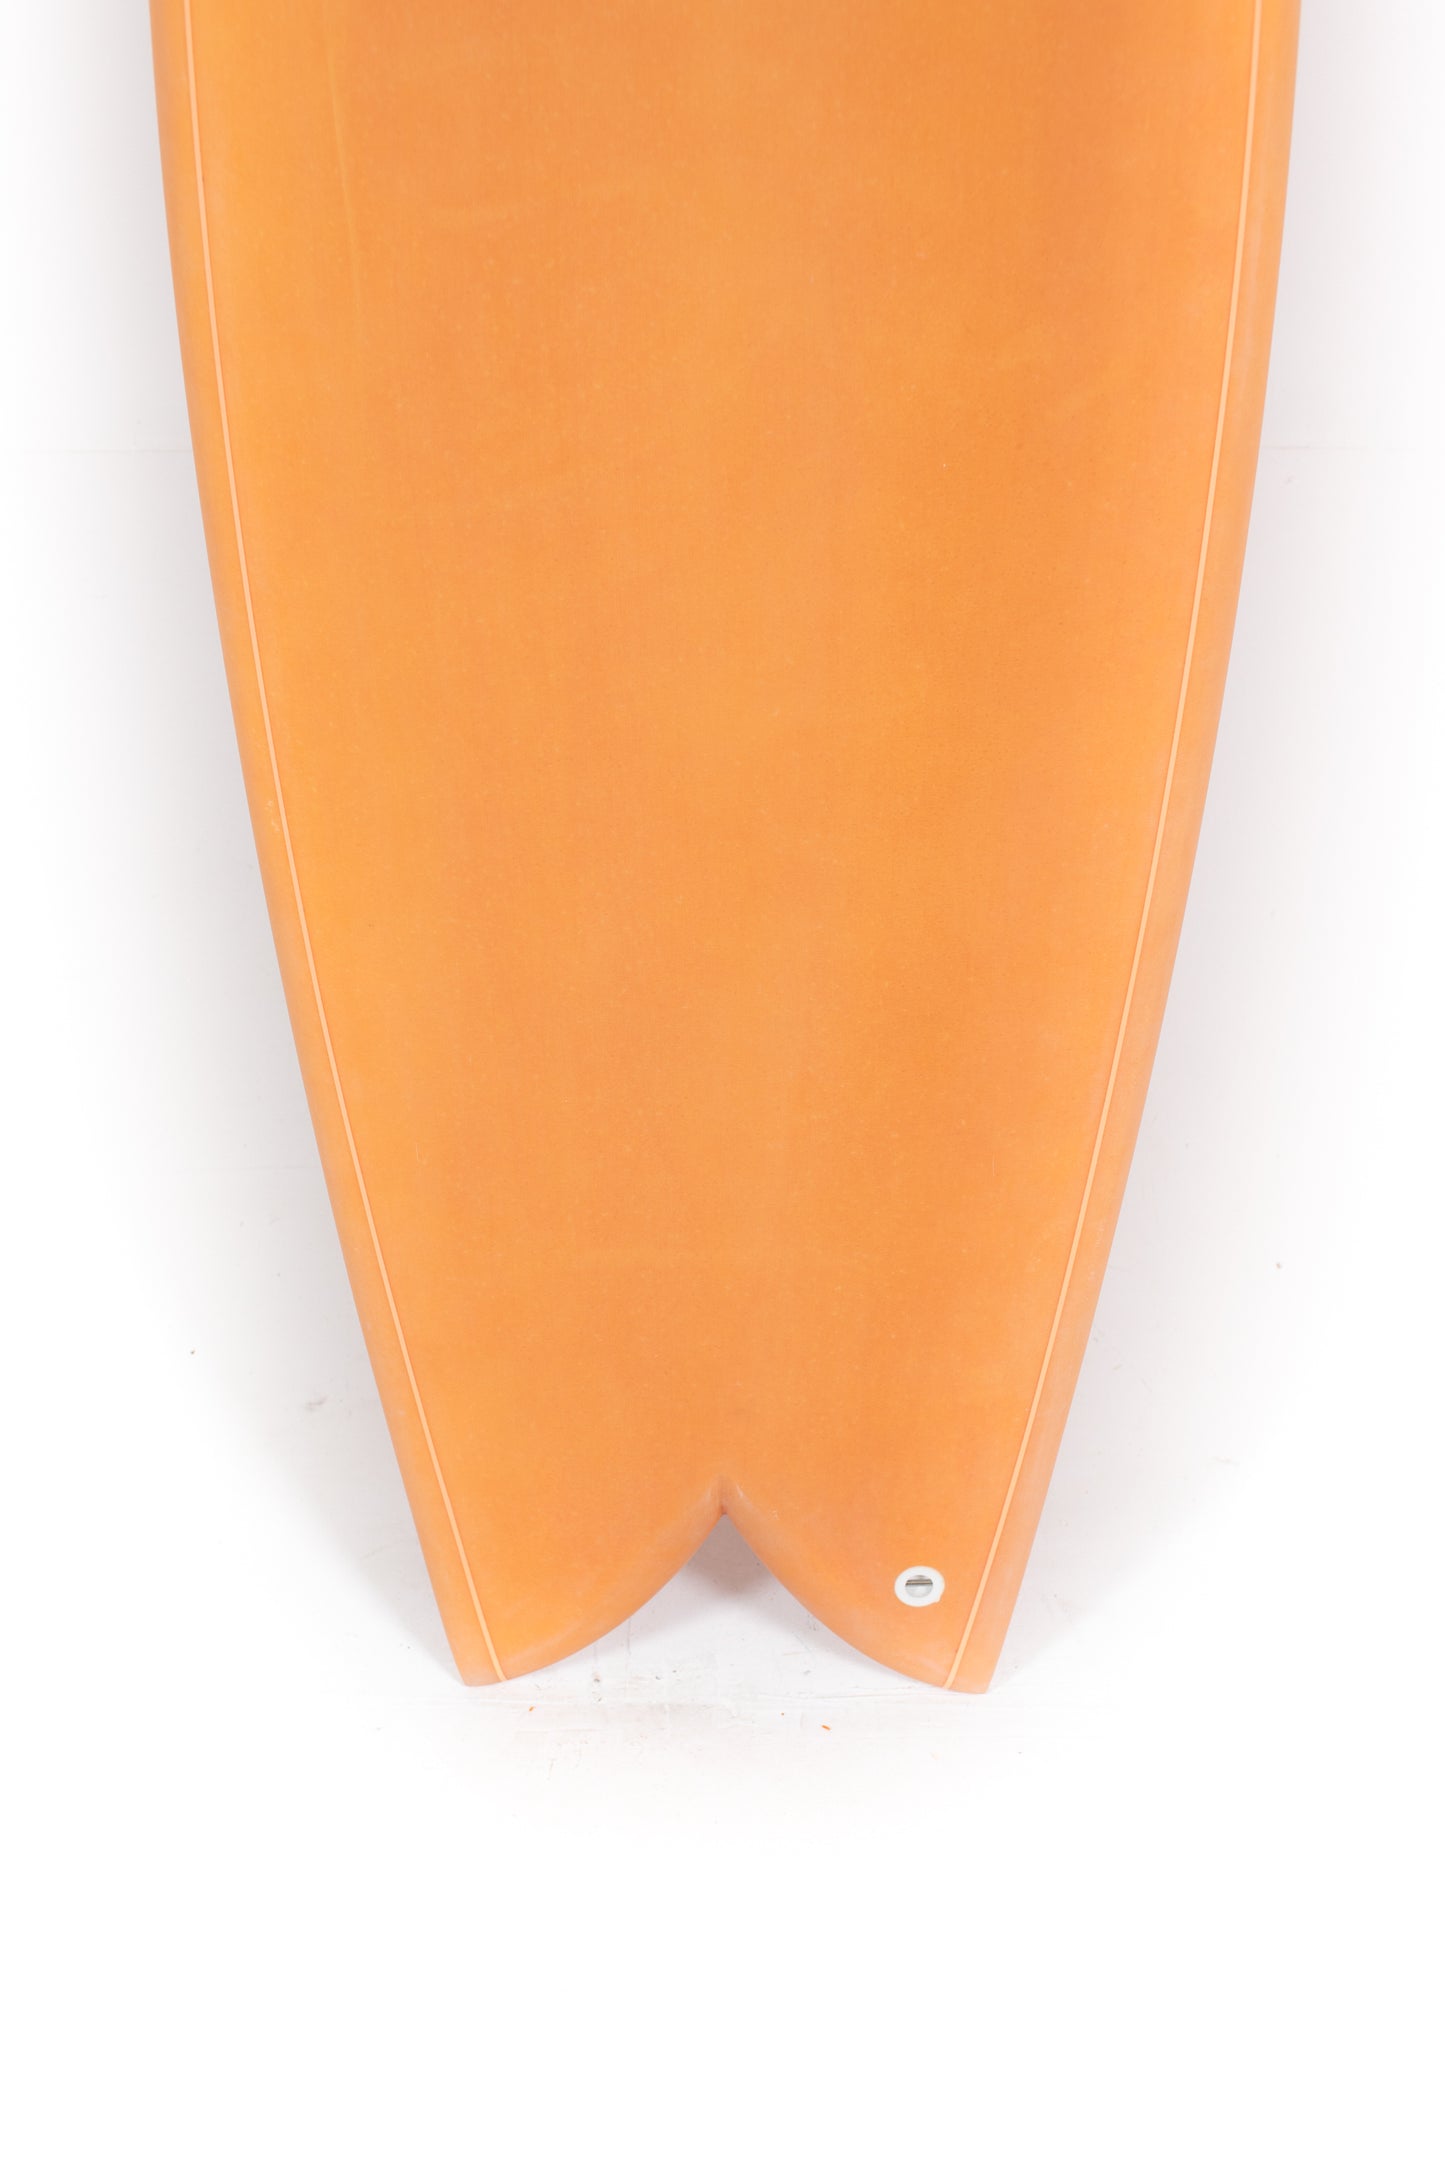 
                  
                    Pukas Surf Shop -  Indio Surfboards - DAB TERRACOTA FCS II - 5’7” x 21 x 2 1/2 x 35.80L.
                  
                